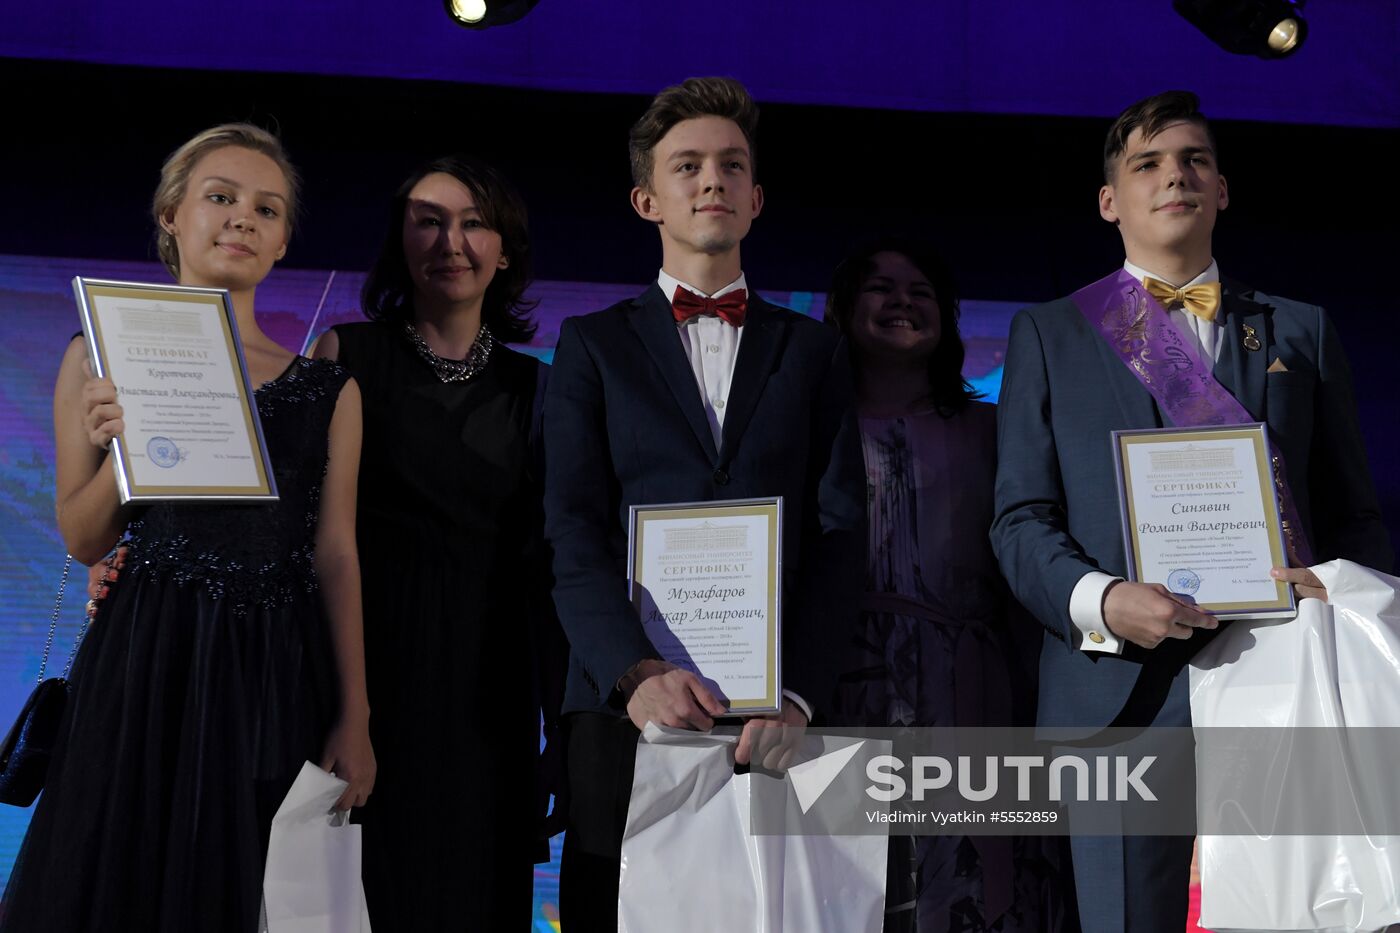 Graduate 2018 national awards ceremony